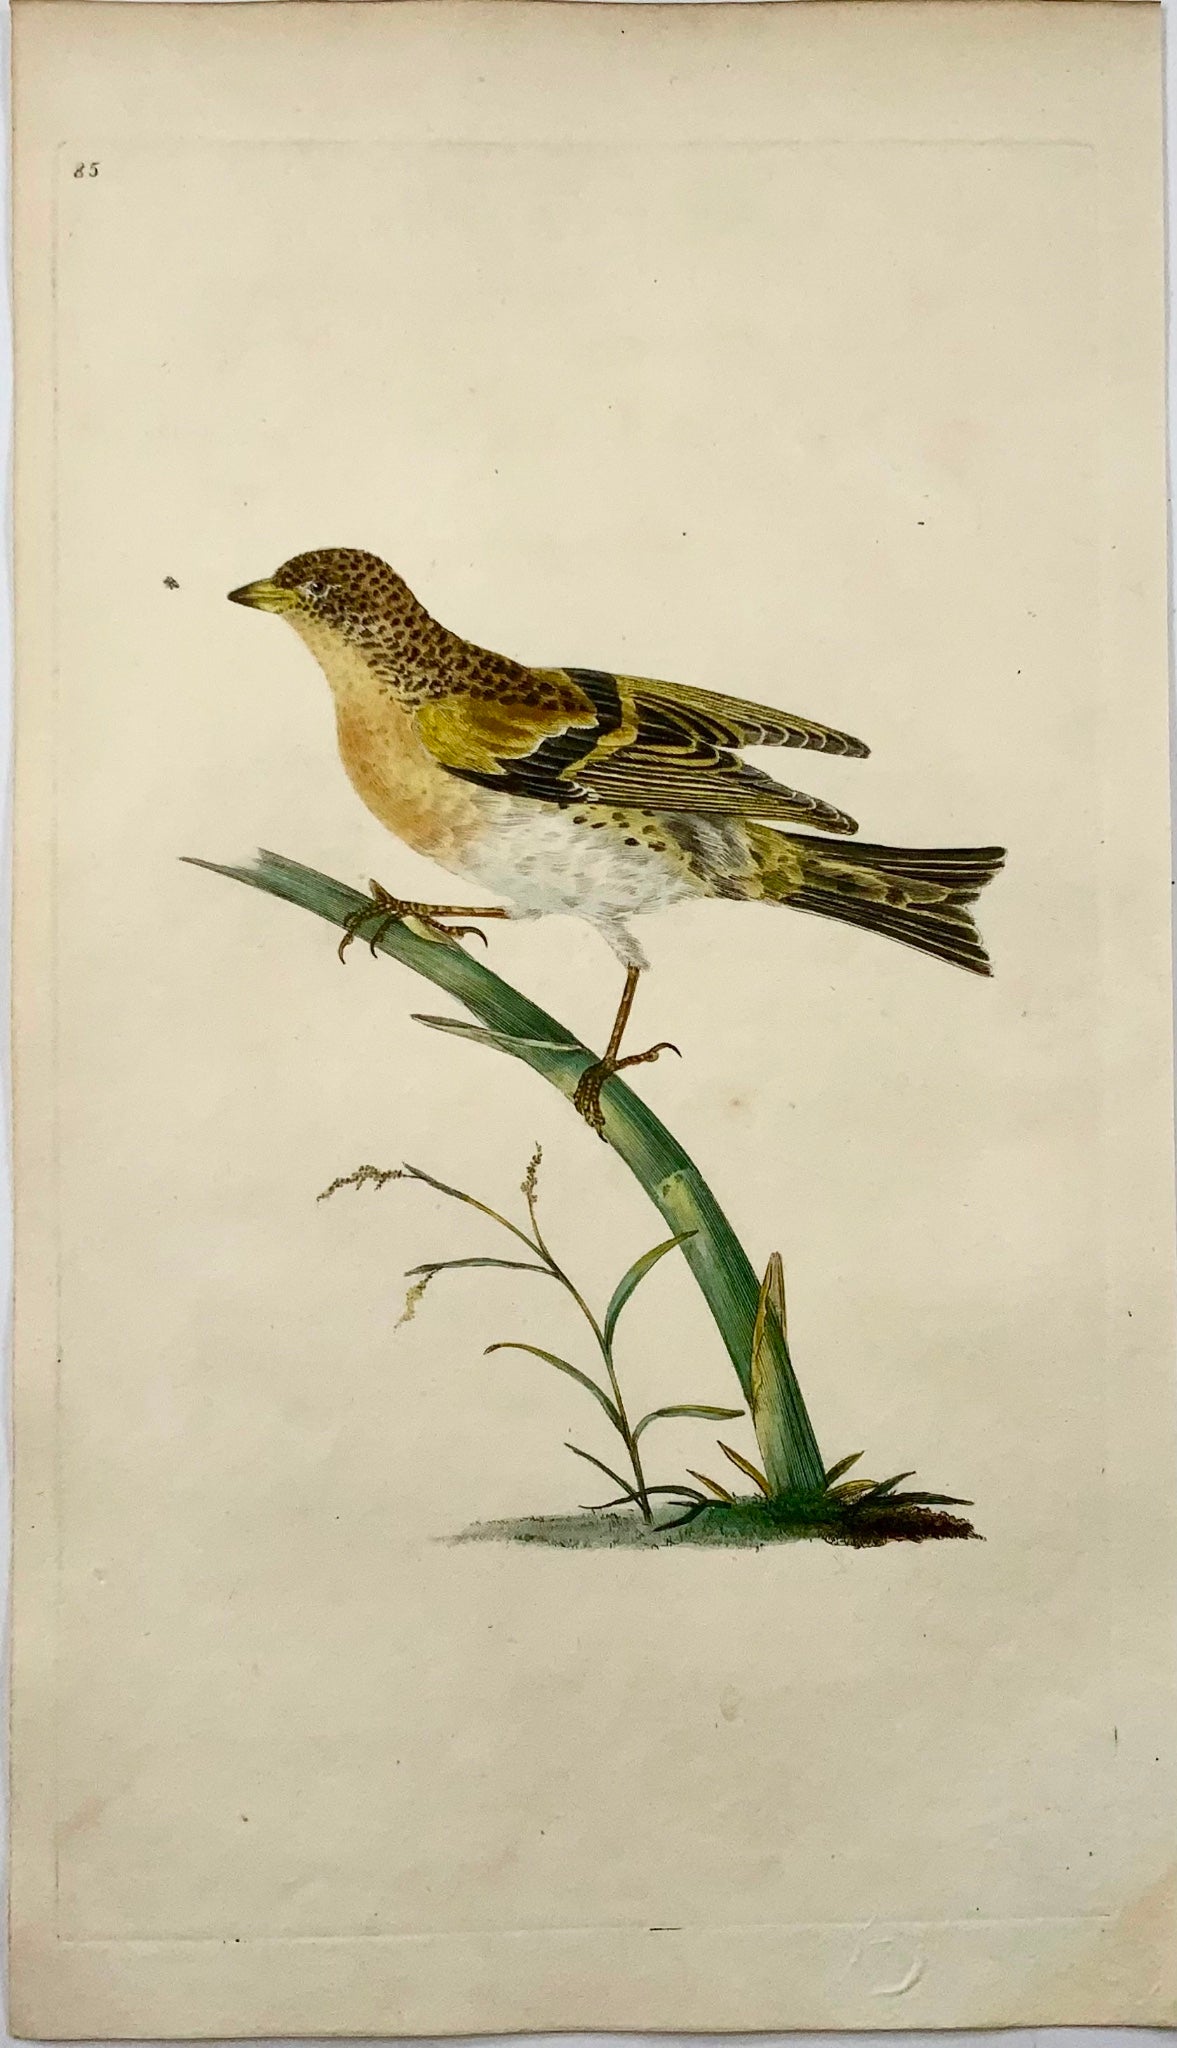 1794 Edward Donovan, Brambling, ornithology, fine hand coloured engraving